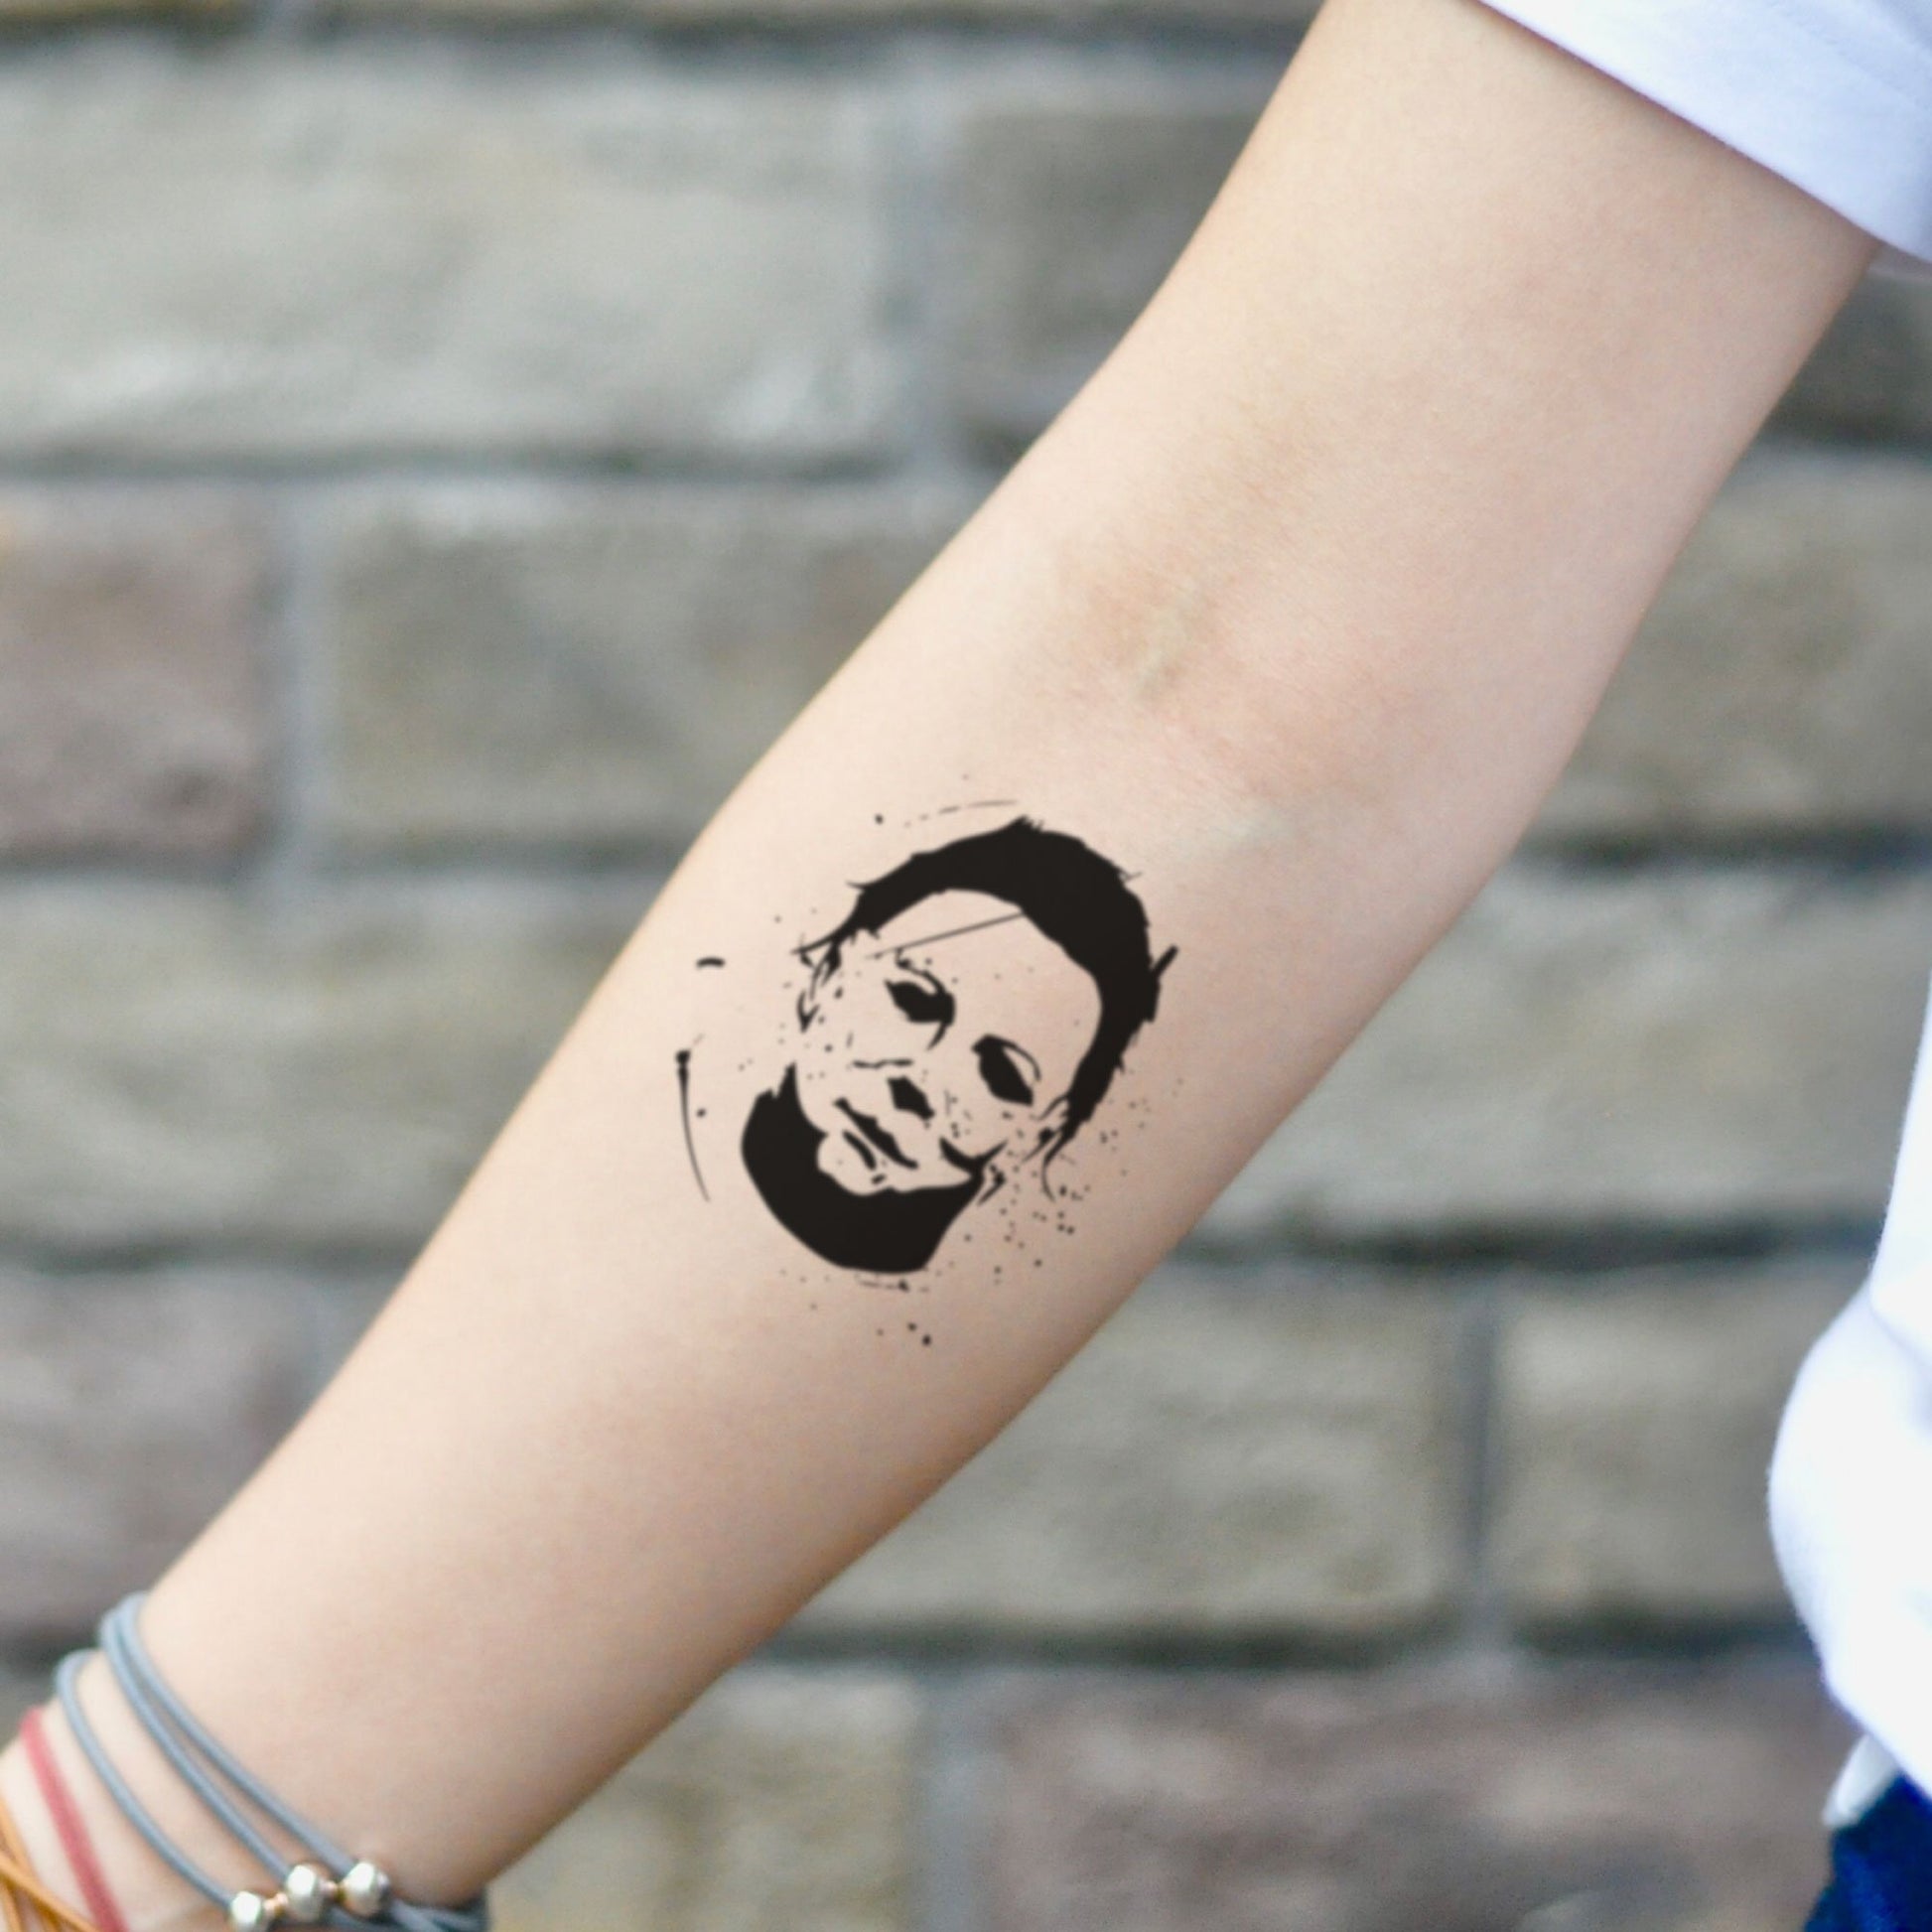 fake small michael myers portrait temporary tattoo sticker design idea on inner arm